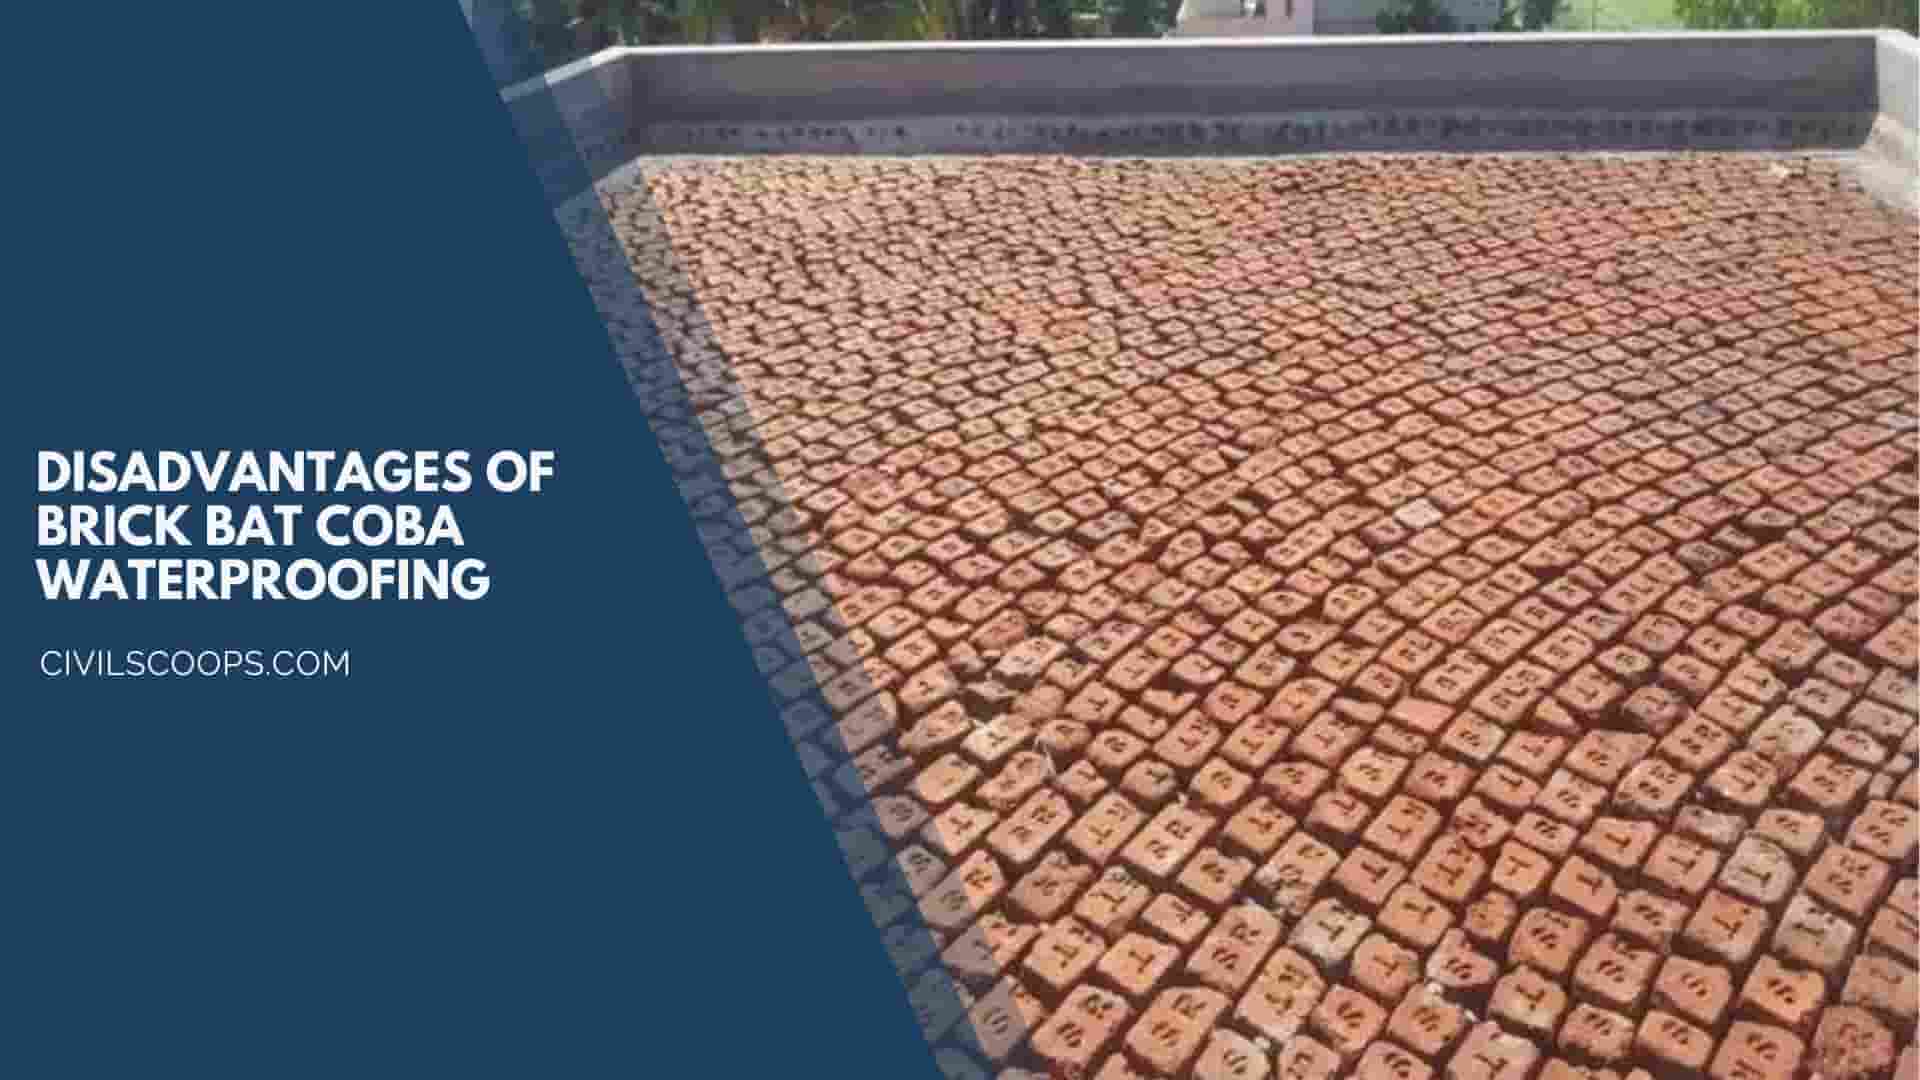 Disadvantages of Brick Bat Coba Waterproofing